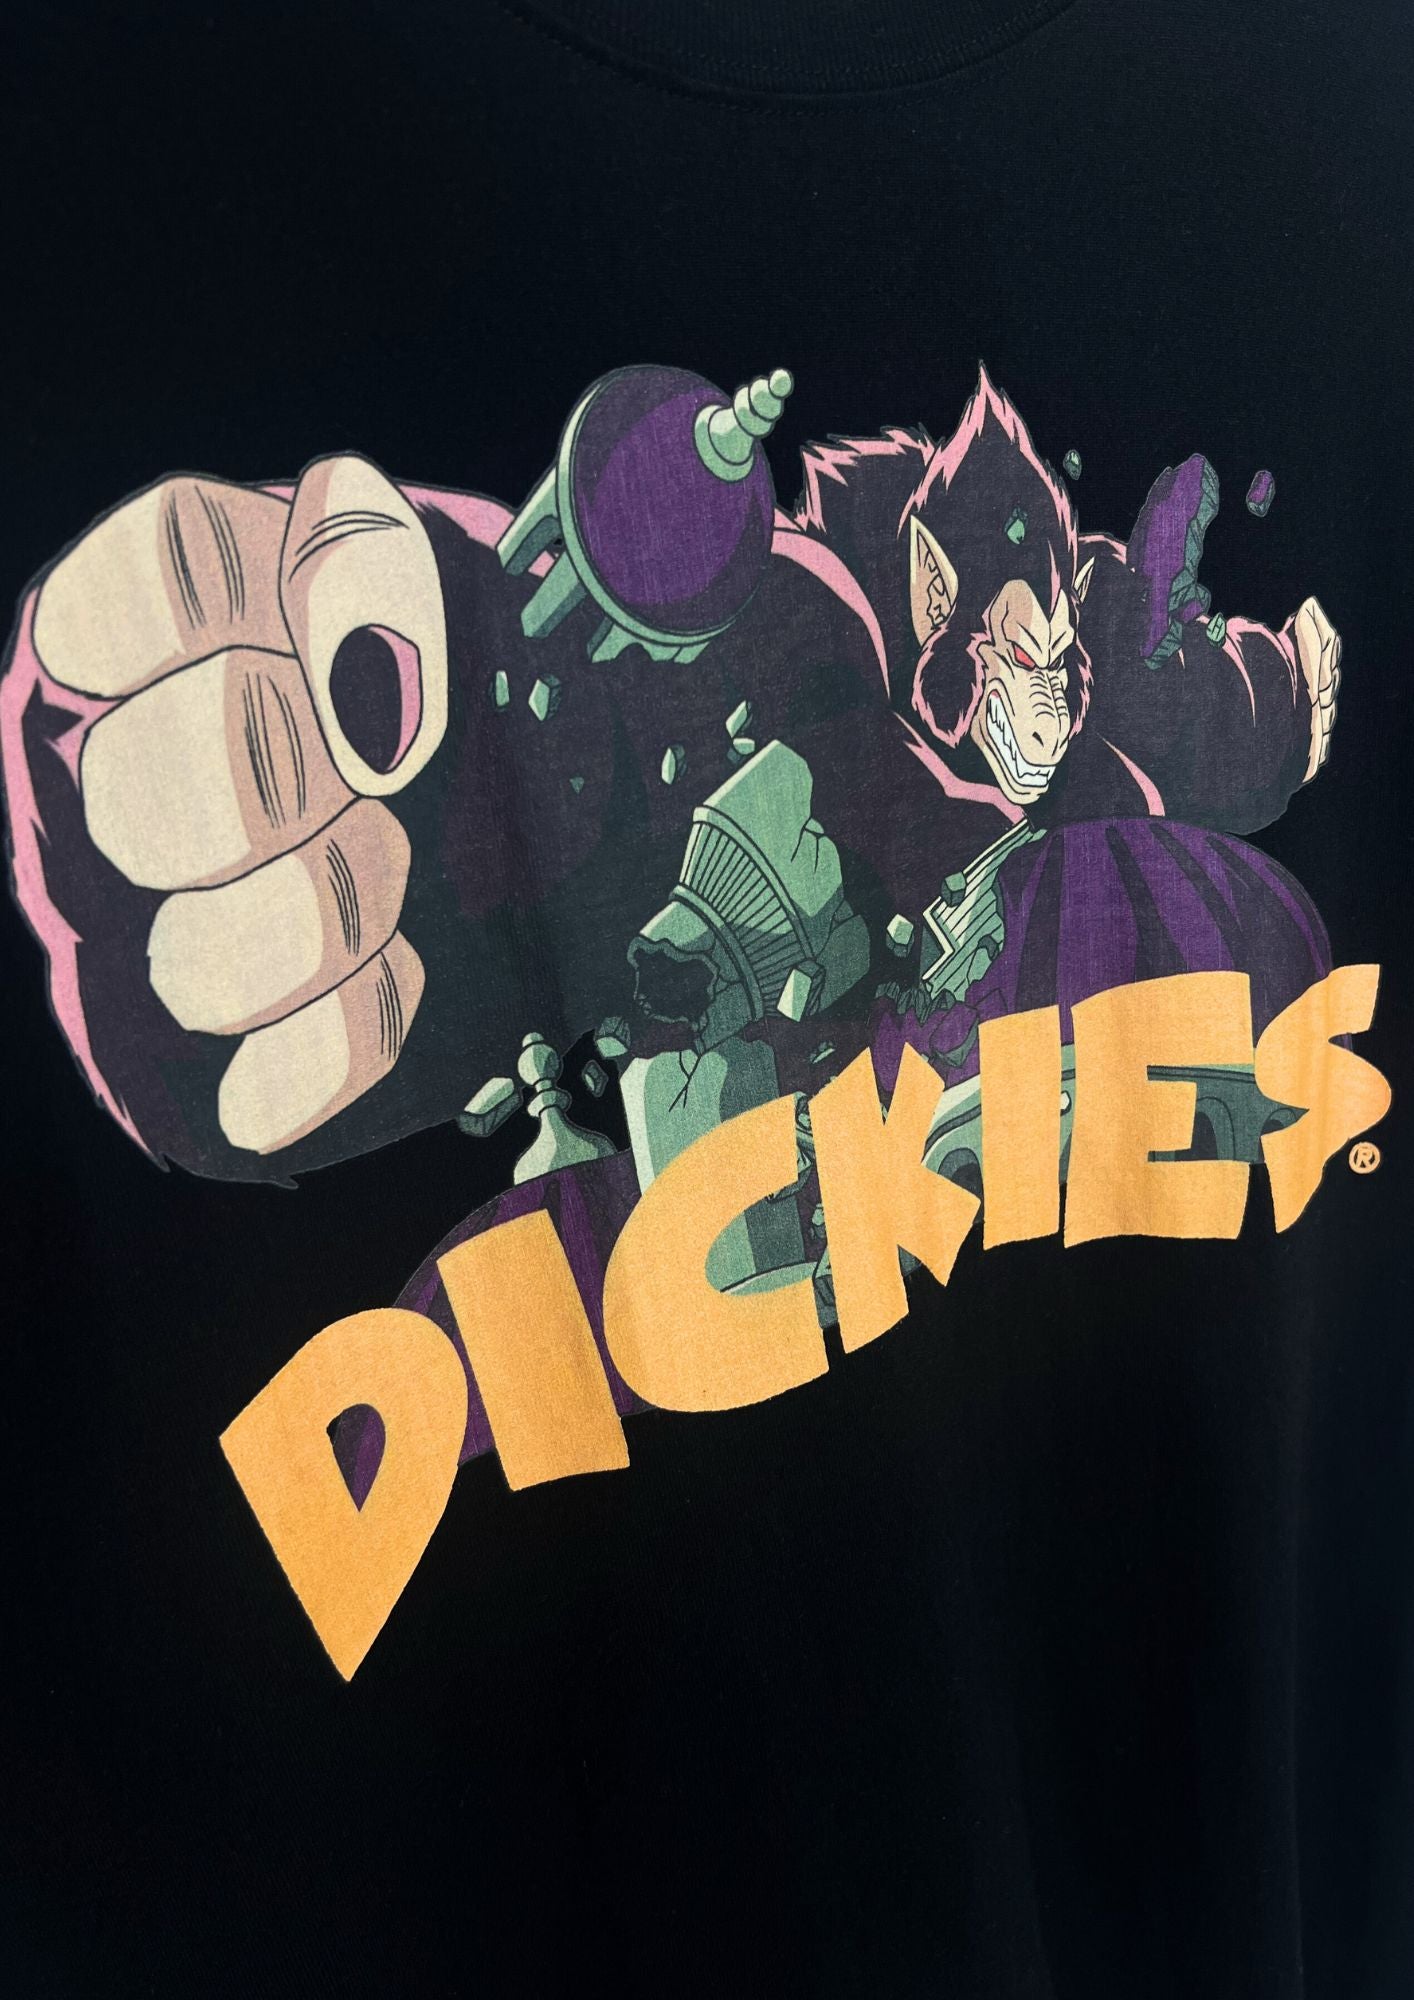 2018 Dragon Ball Z x Dickies Goku Ape T-shirt